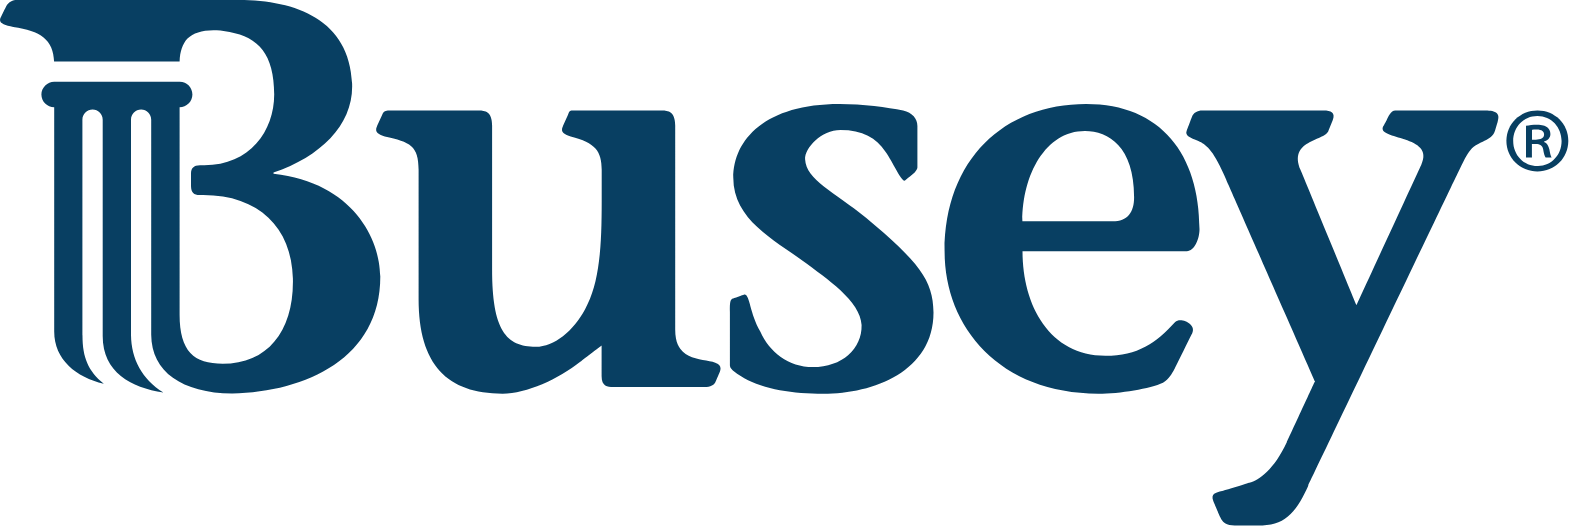 First Busey logo large (transparent PNG)